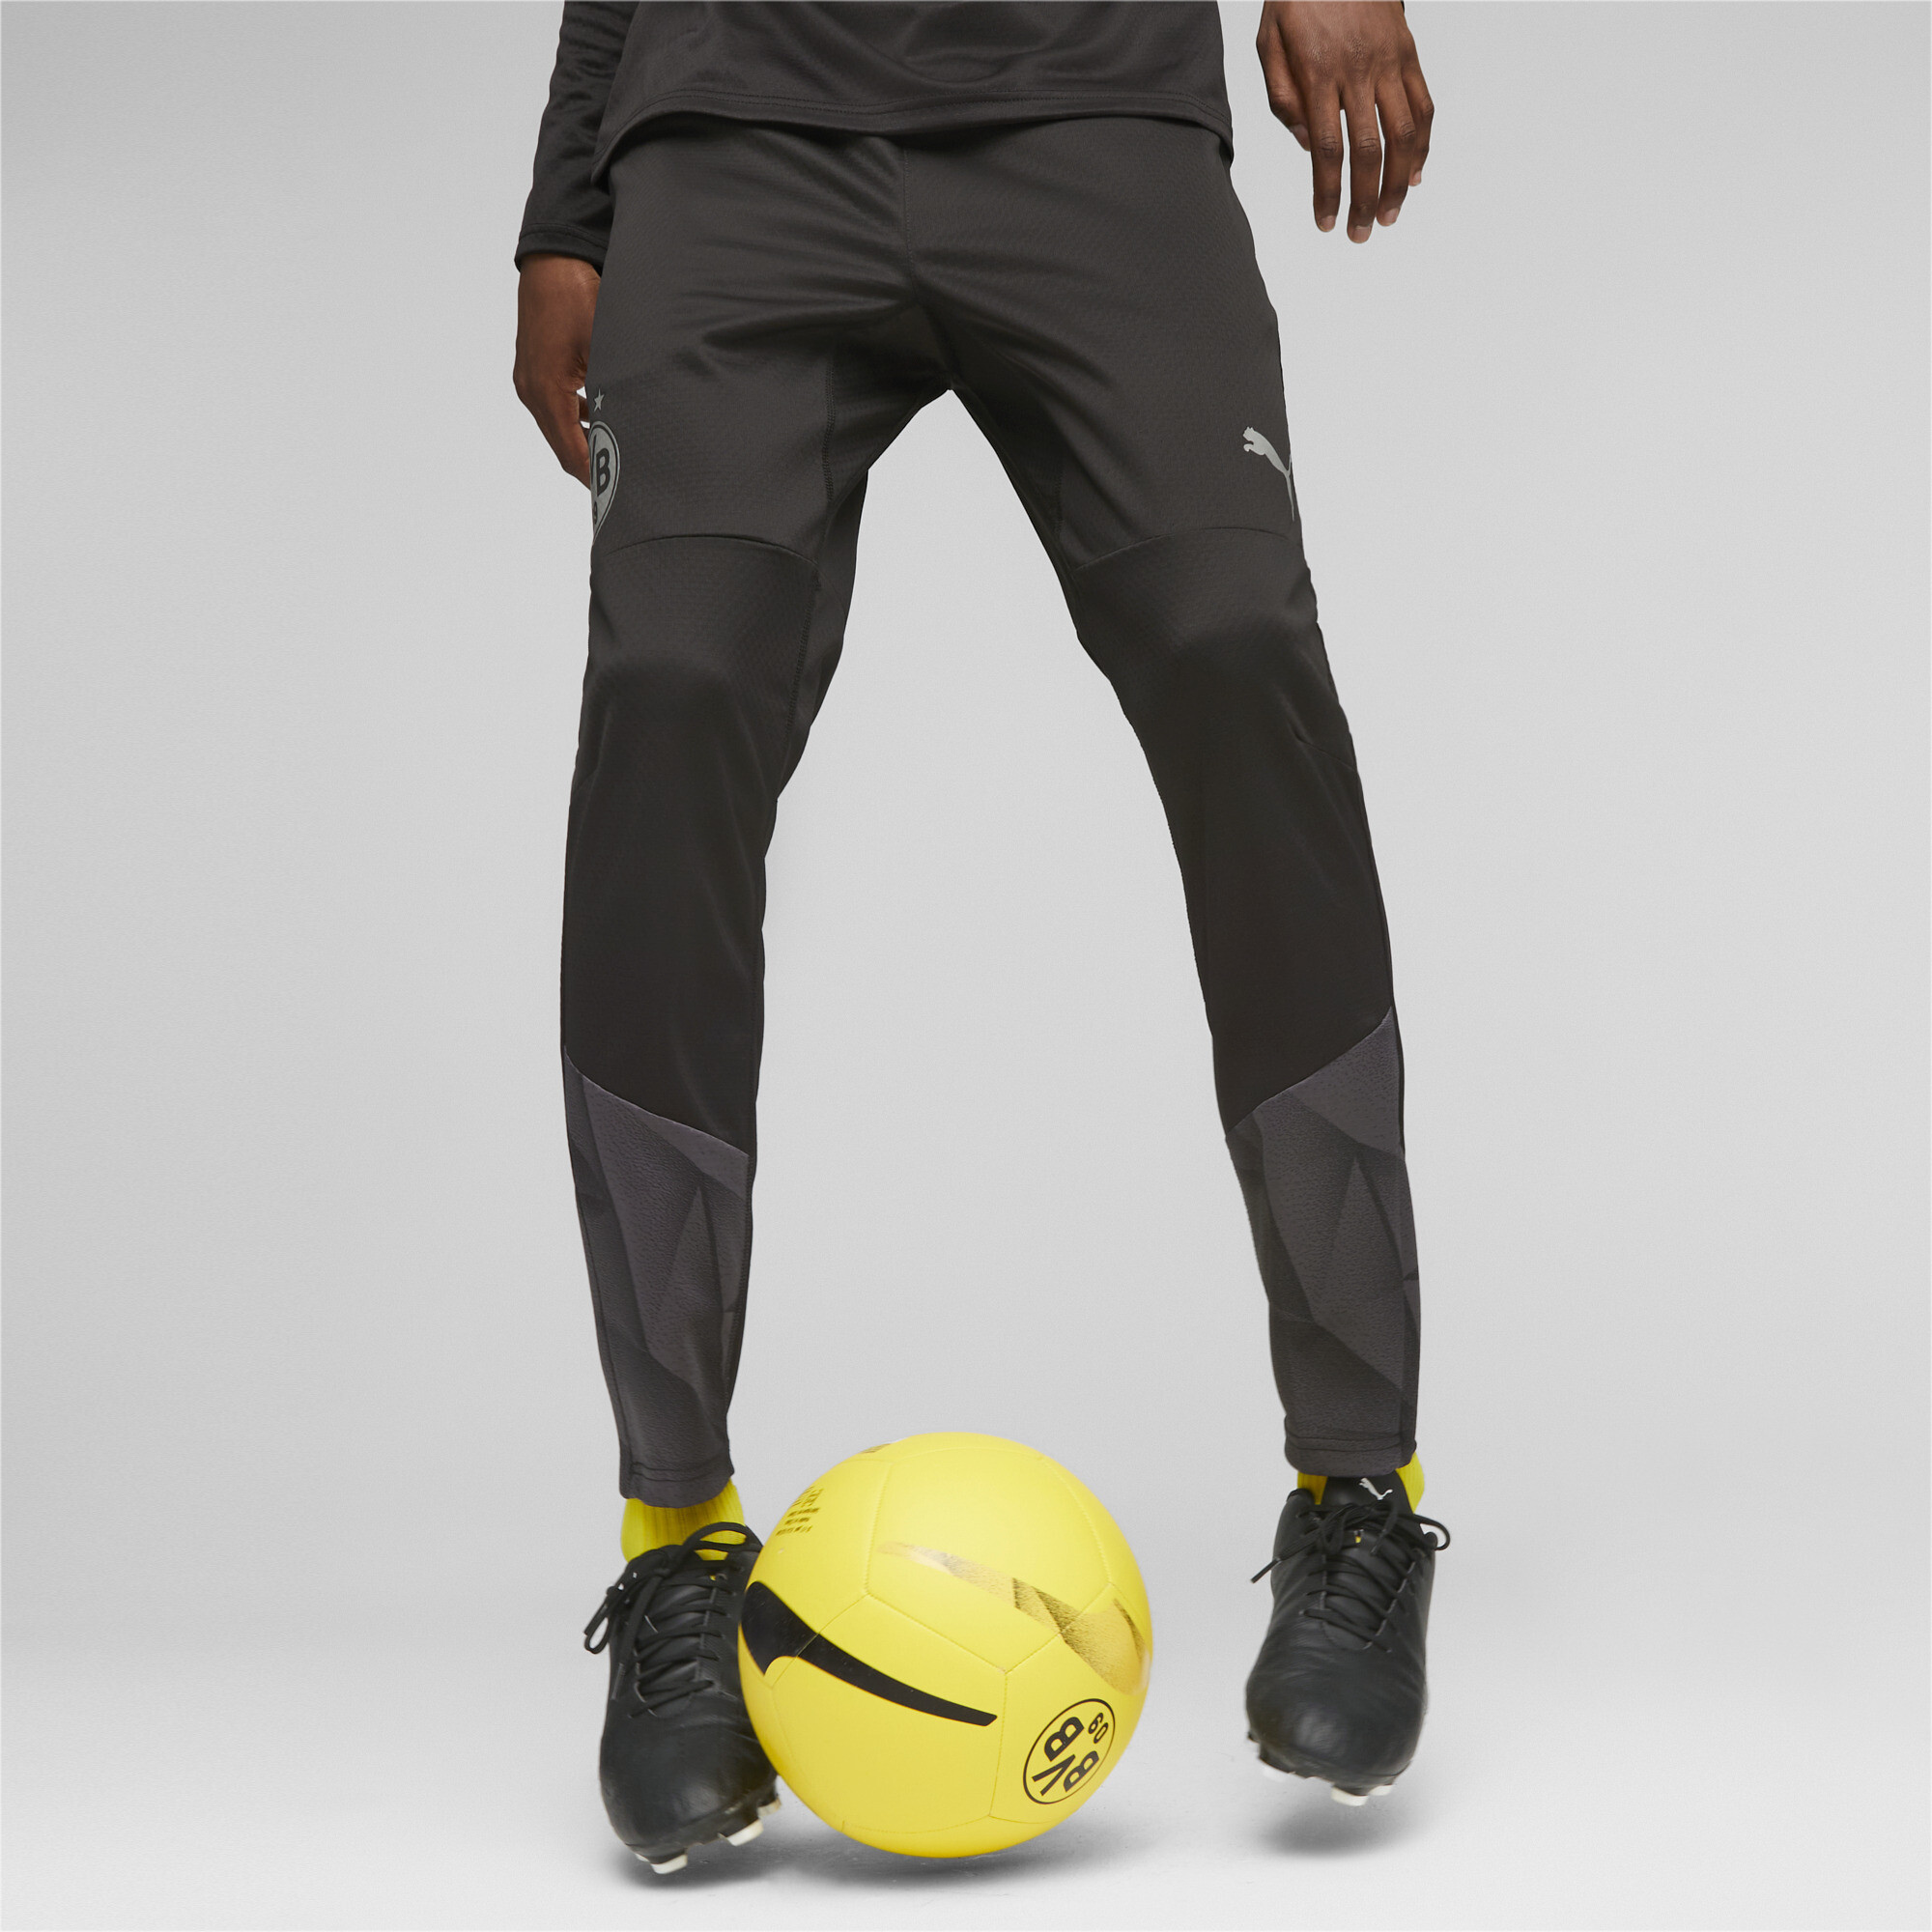 Men's Puma Borussia Dortmund Football Training Pants, Black, Size 3XL, Clothing